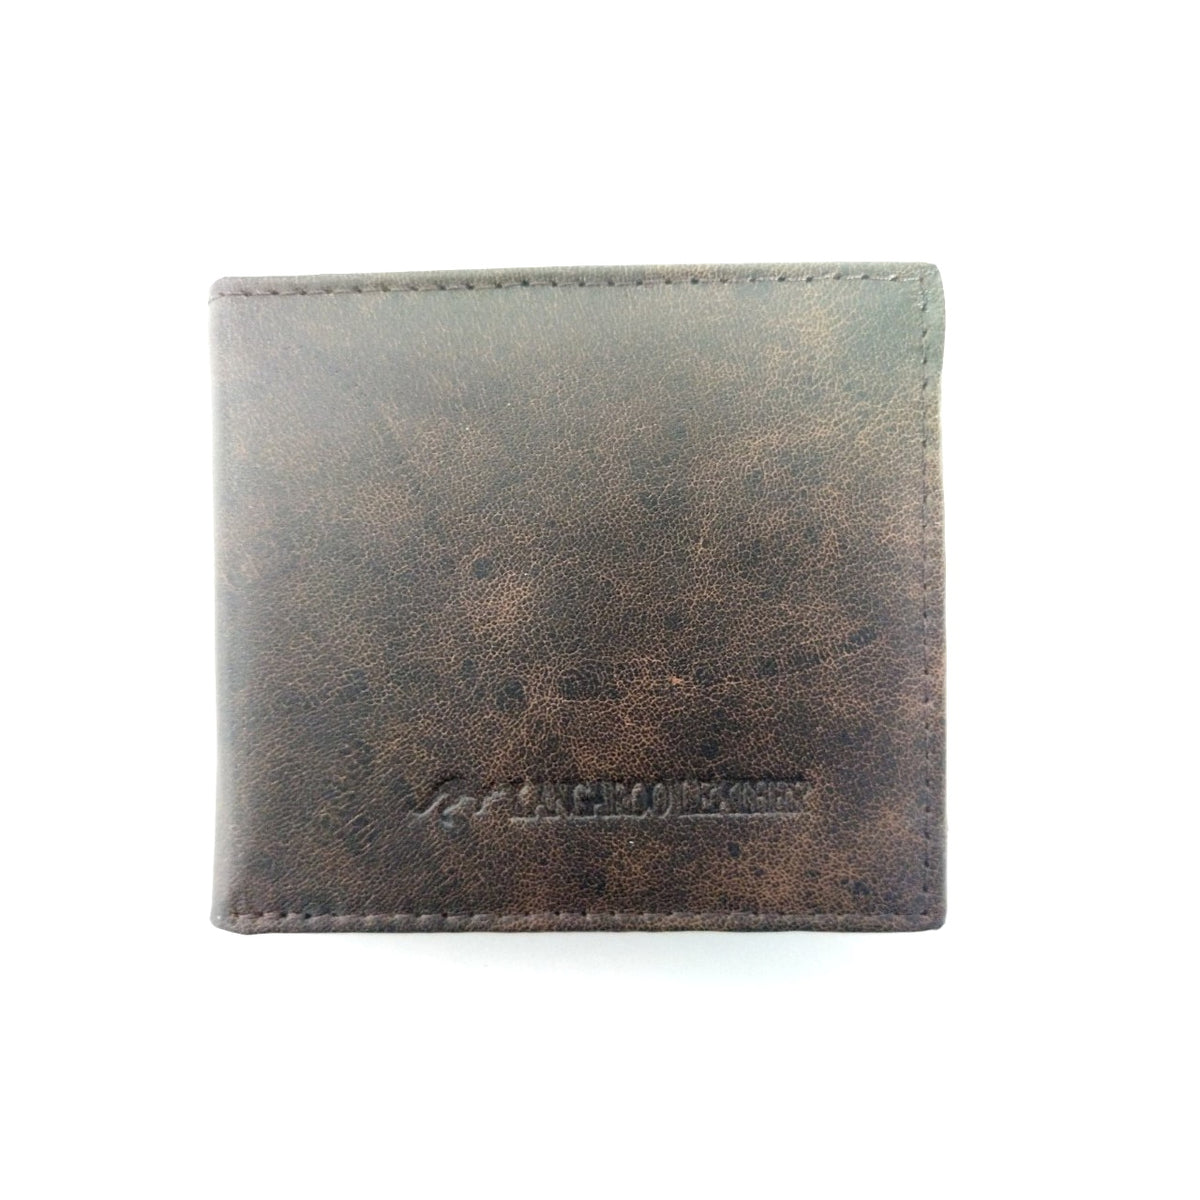 Barmah Kangaroo Leather Single Fold Wallet in Vintage Brown